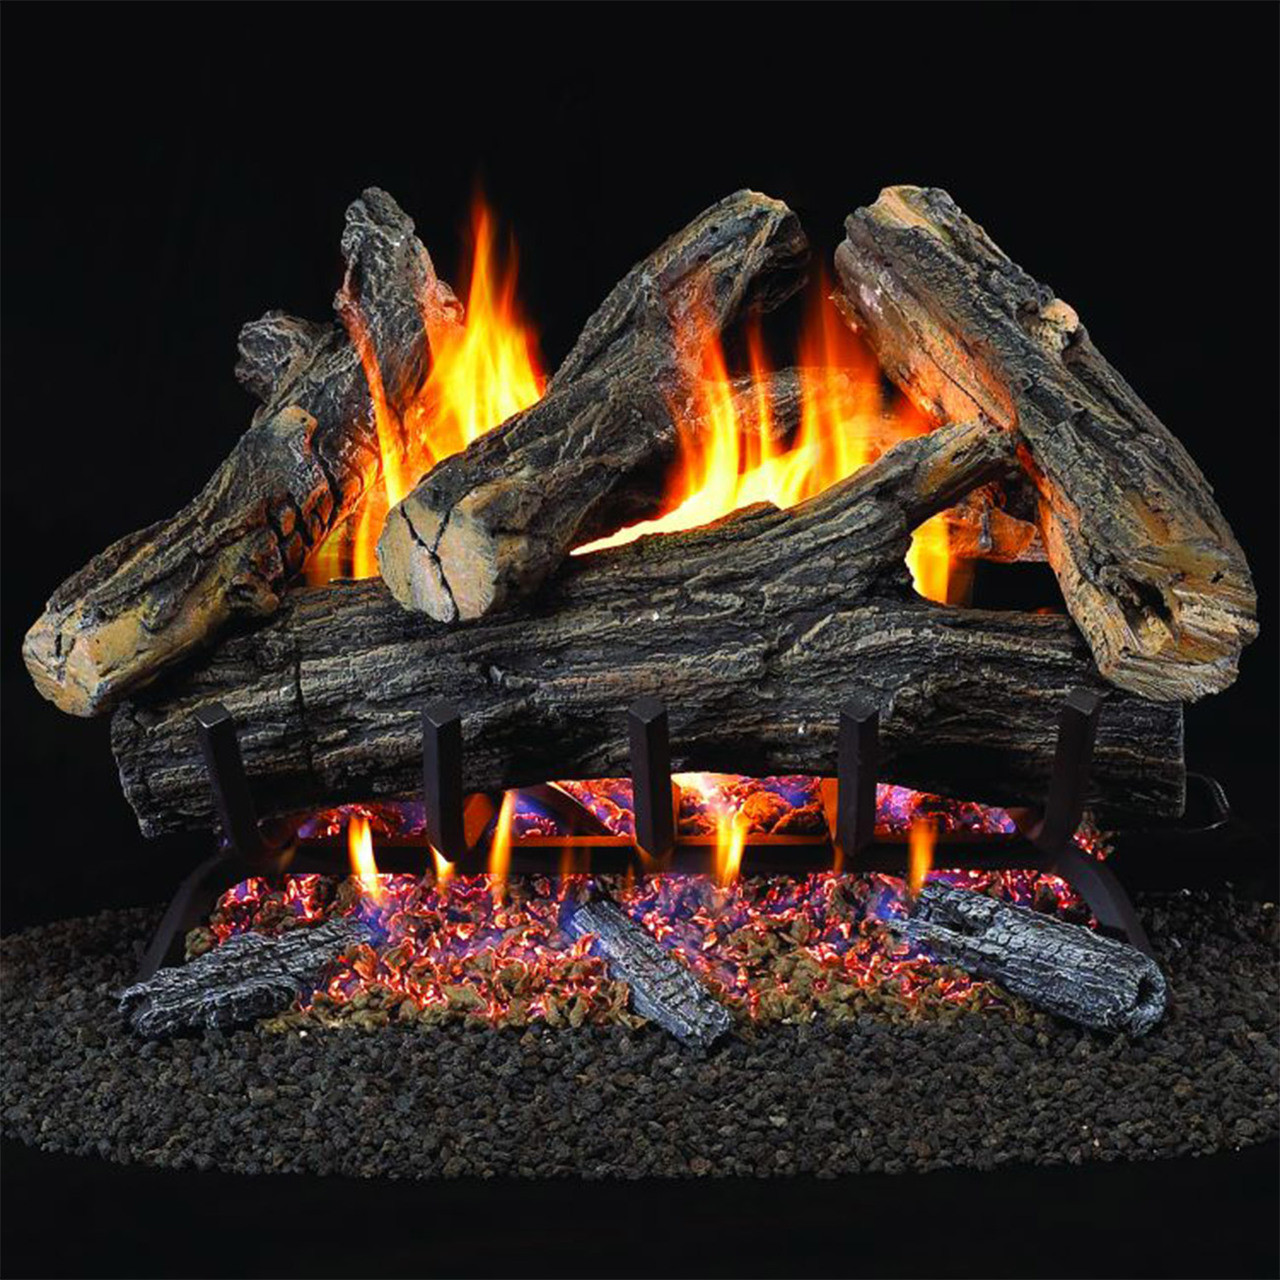 Vented Natural Gas Fireplace Log Set 24 in, 55,000 BTU, Model